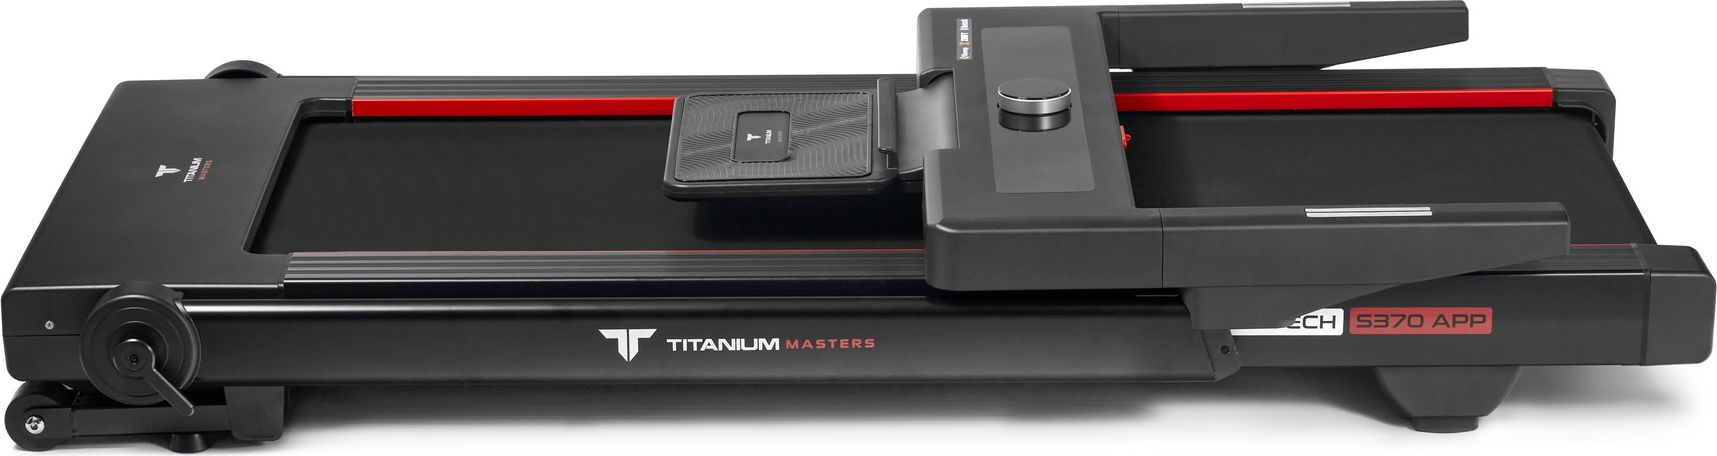 Titanium Masters Slimtech S370 APP ультракомпактные